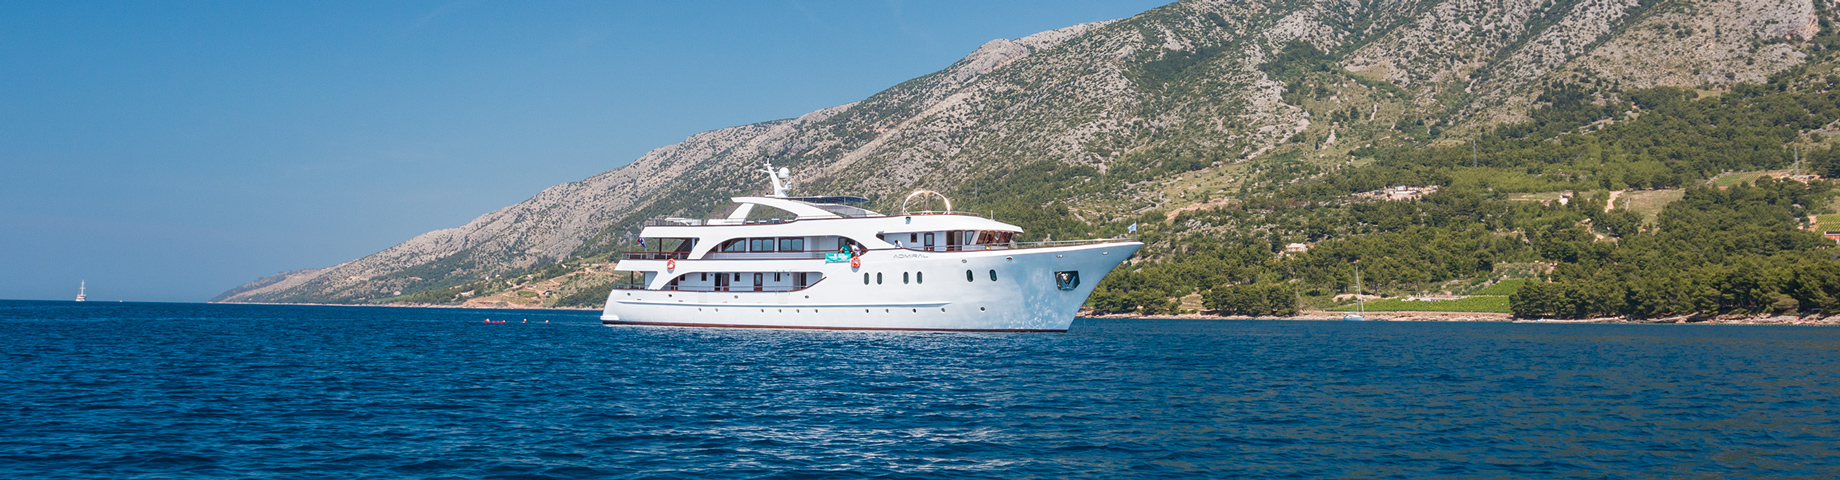 Ionian Yacht Cruise, Ionian Island Fantasy Cruise